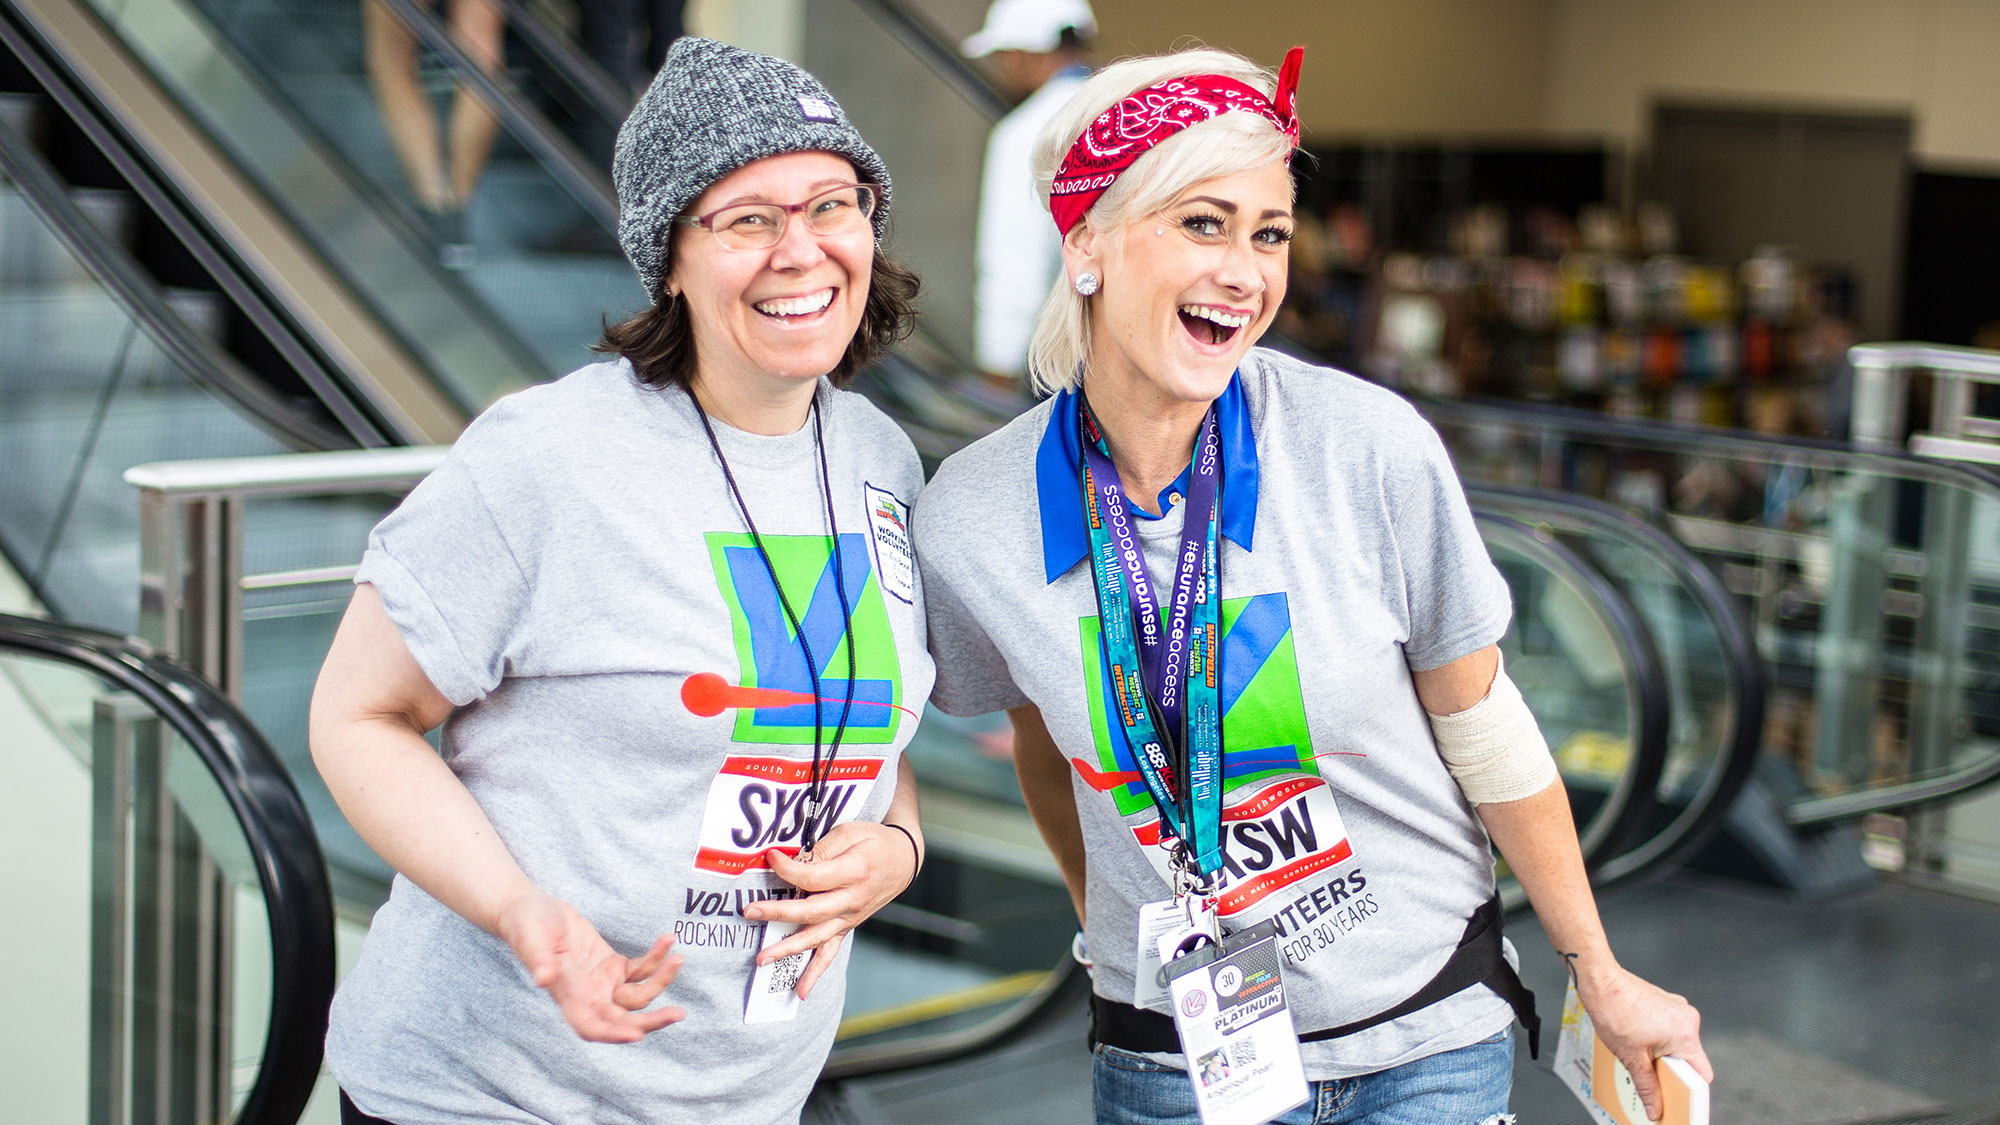 SXSW Volunteers – Photo by Michael Caufield